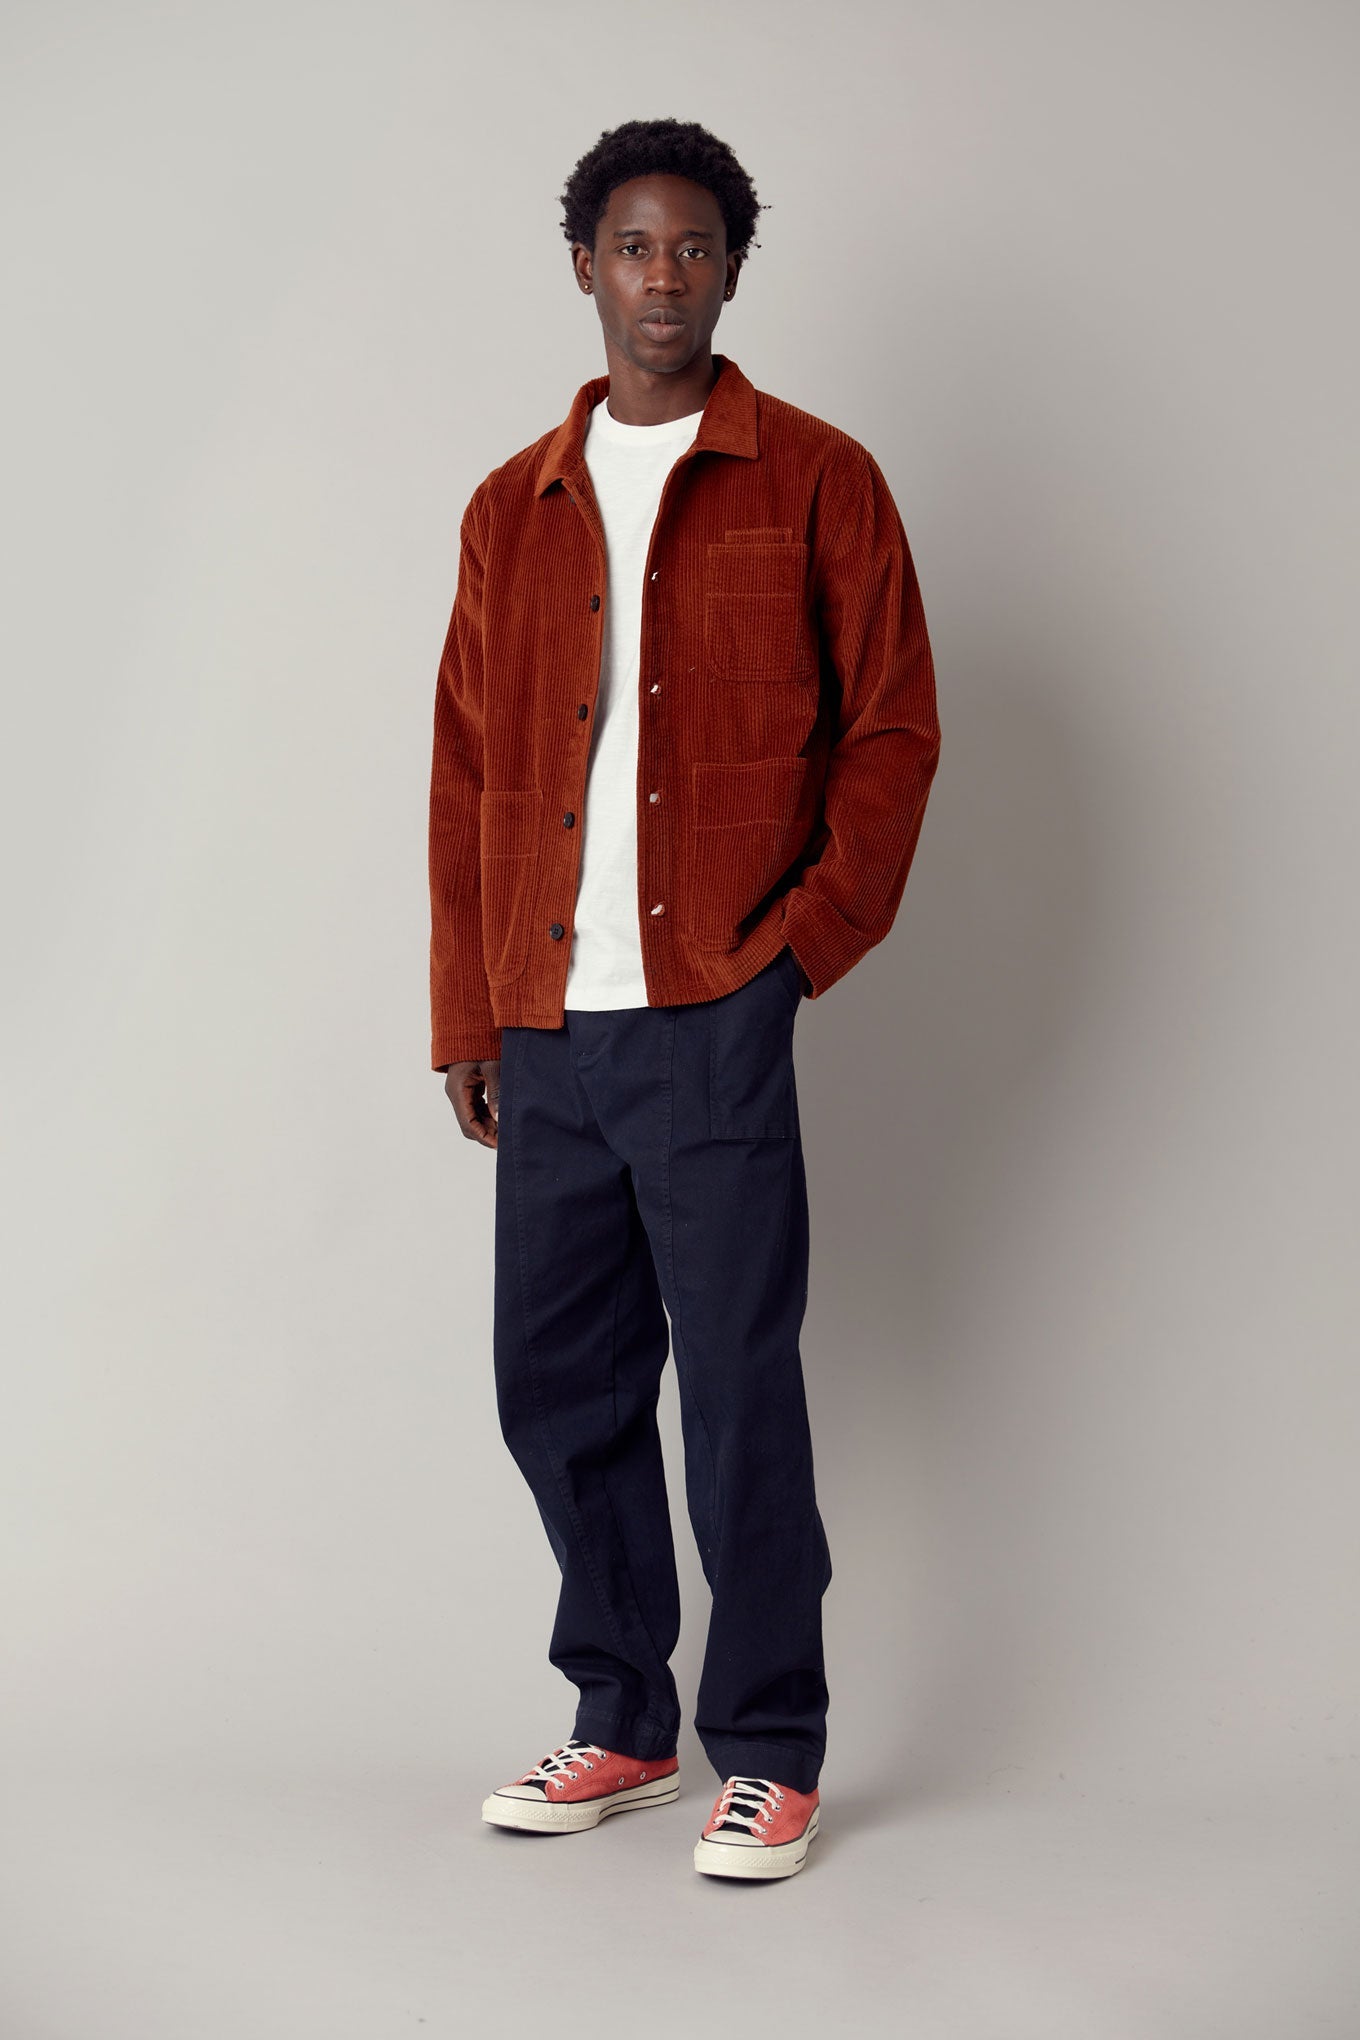 Red-brown corduroy jacket MONDRIAN made of 100% organic cotton from Komodo